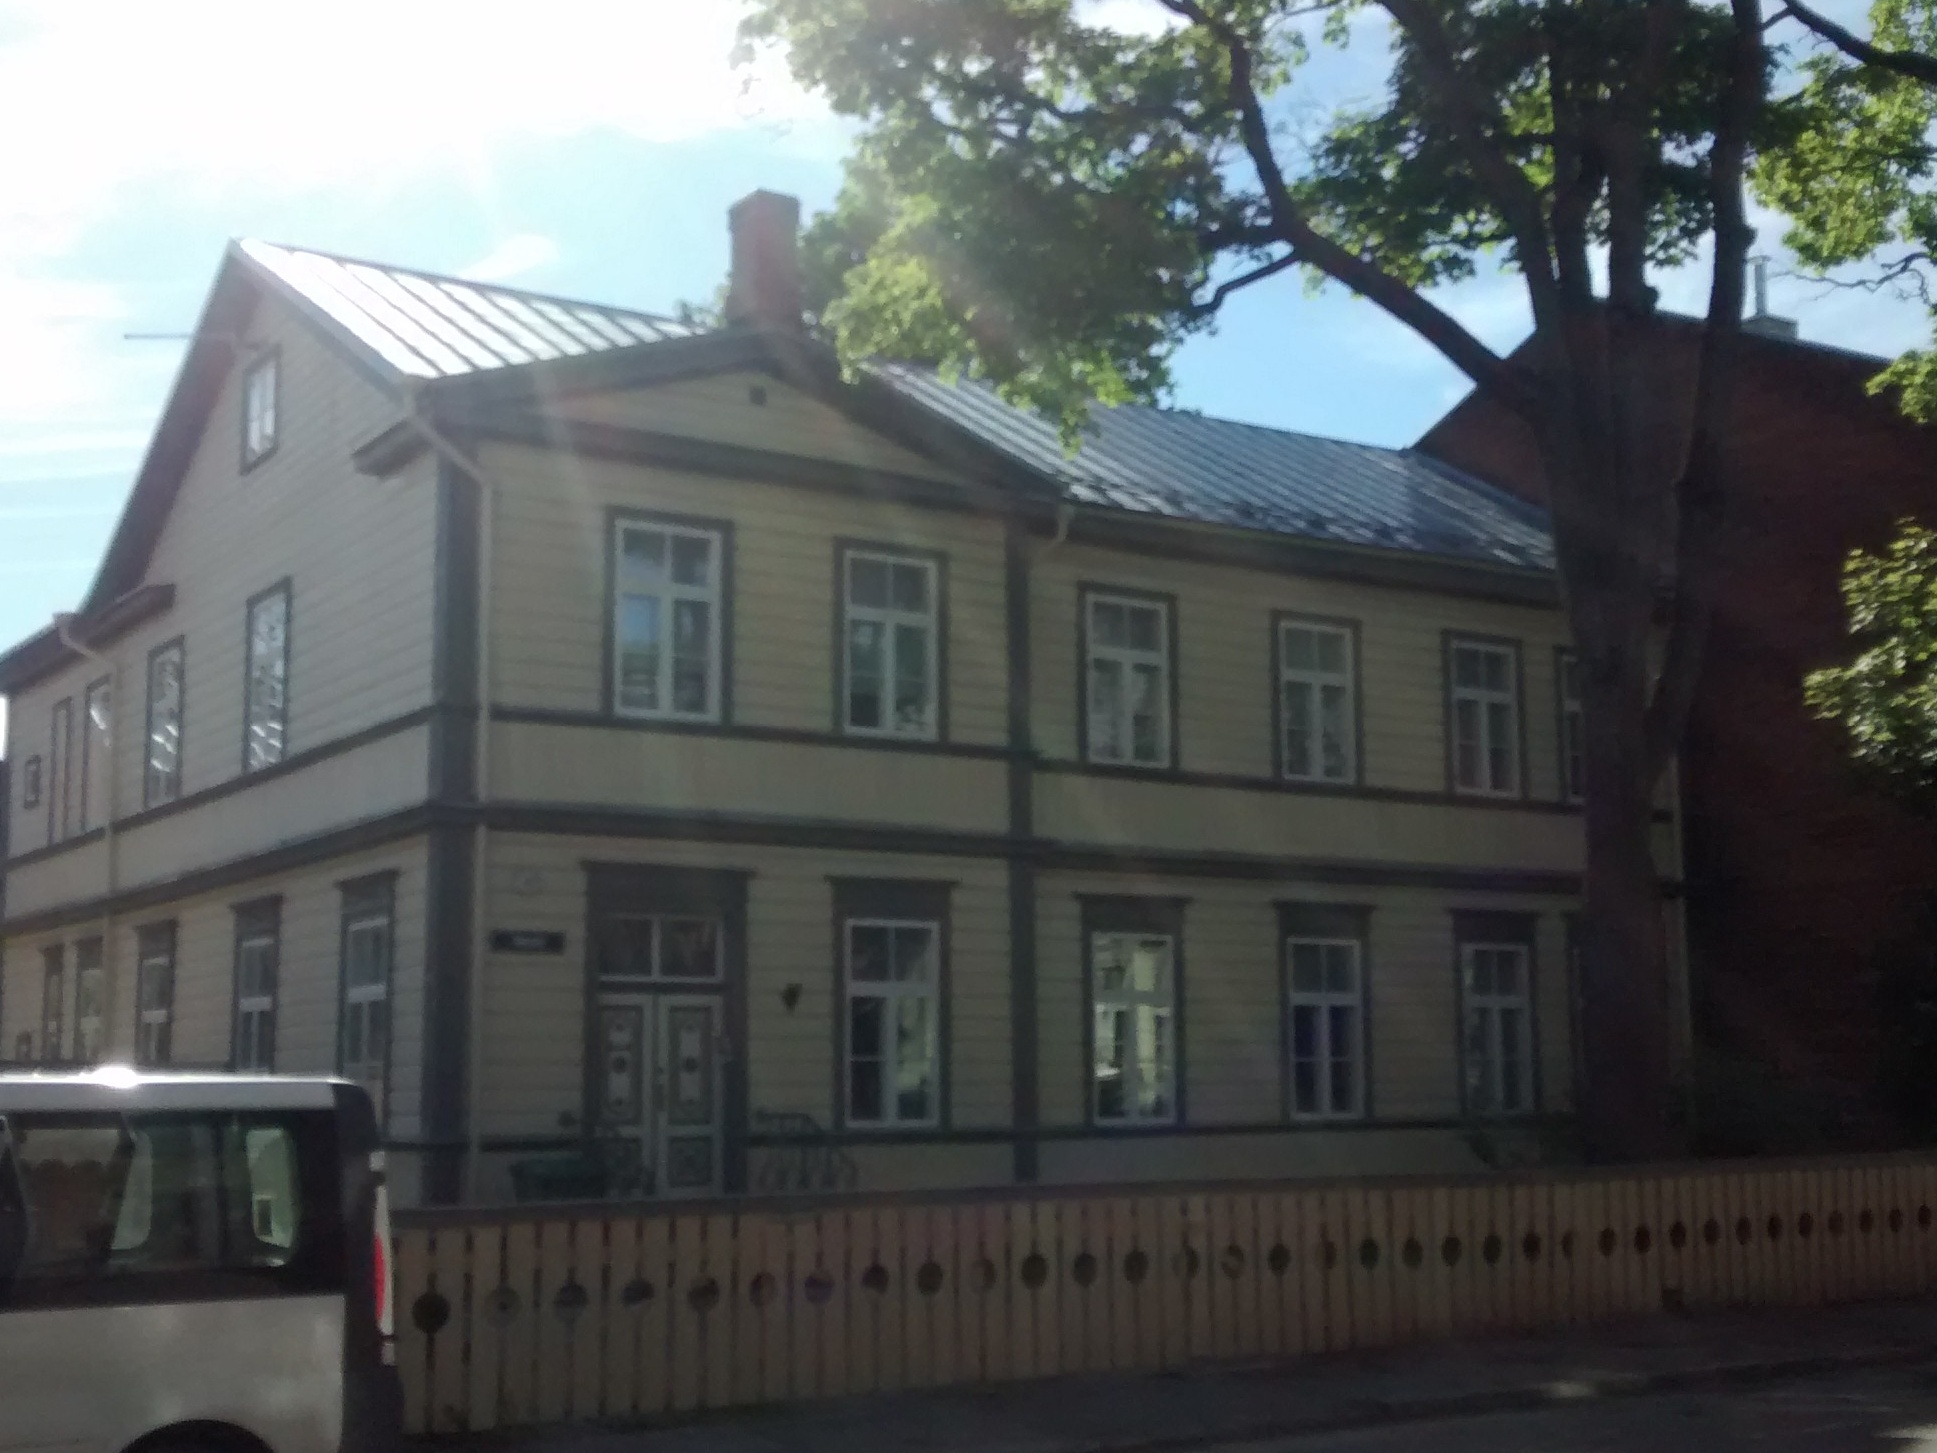 Tartu, Veski 47, e ~1890. Laboratory of Tartu City Sanitaar-Epidemiology Station. rephoto